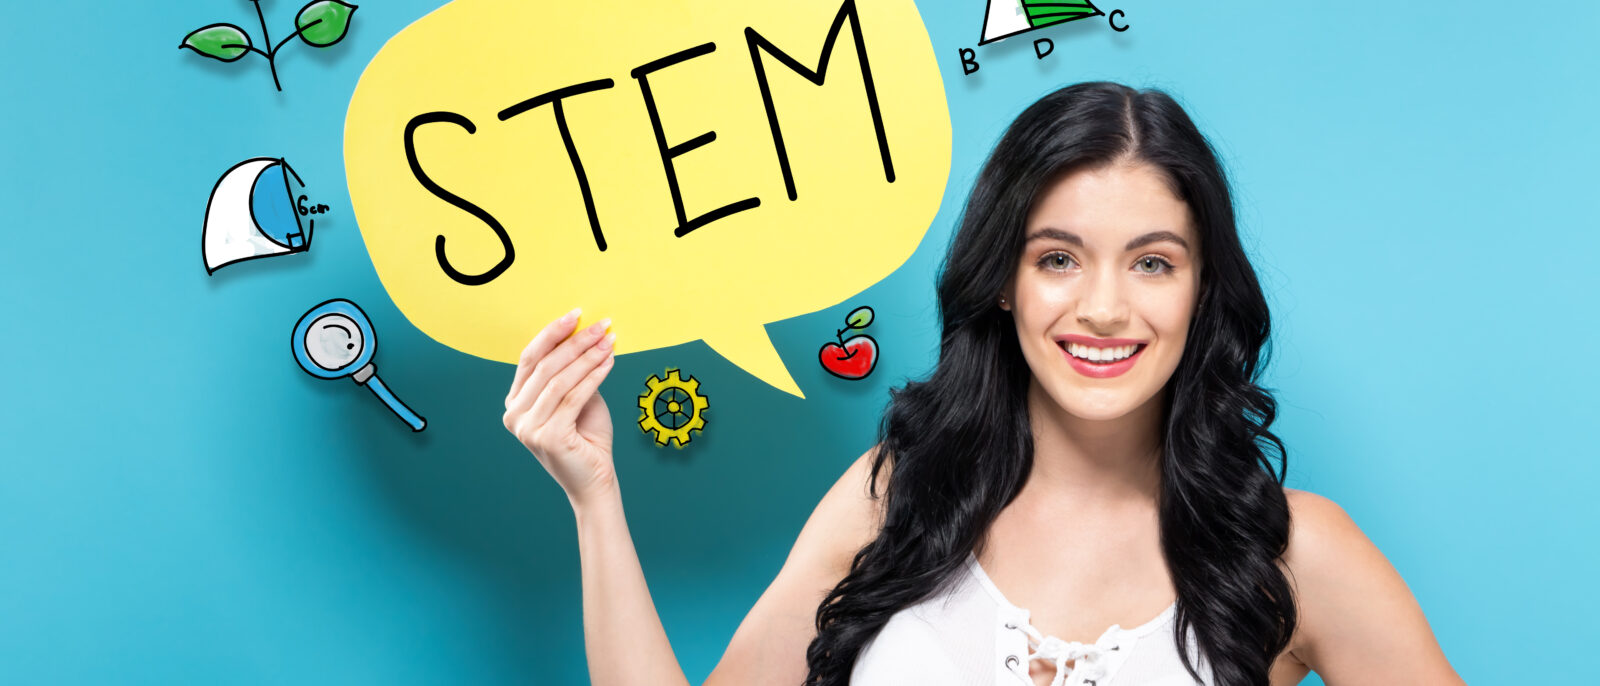 HU developing STEM careers for women in Latin America